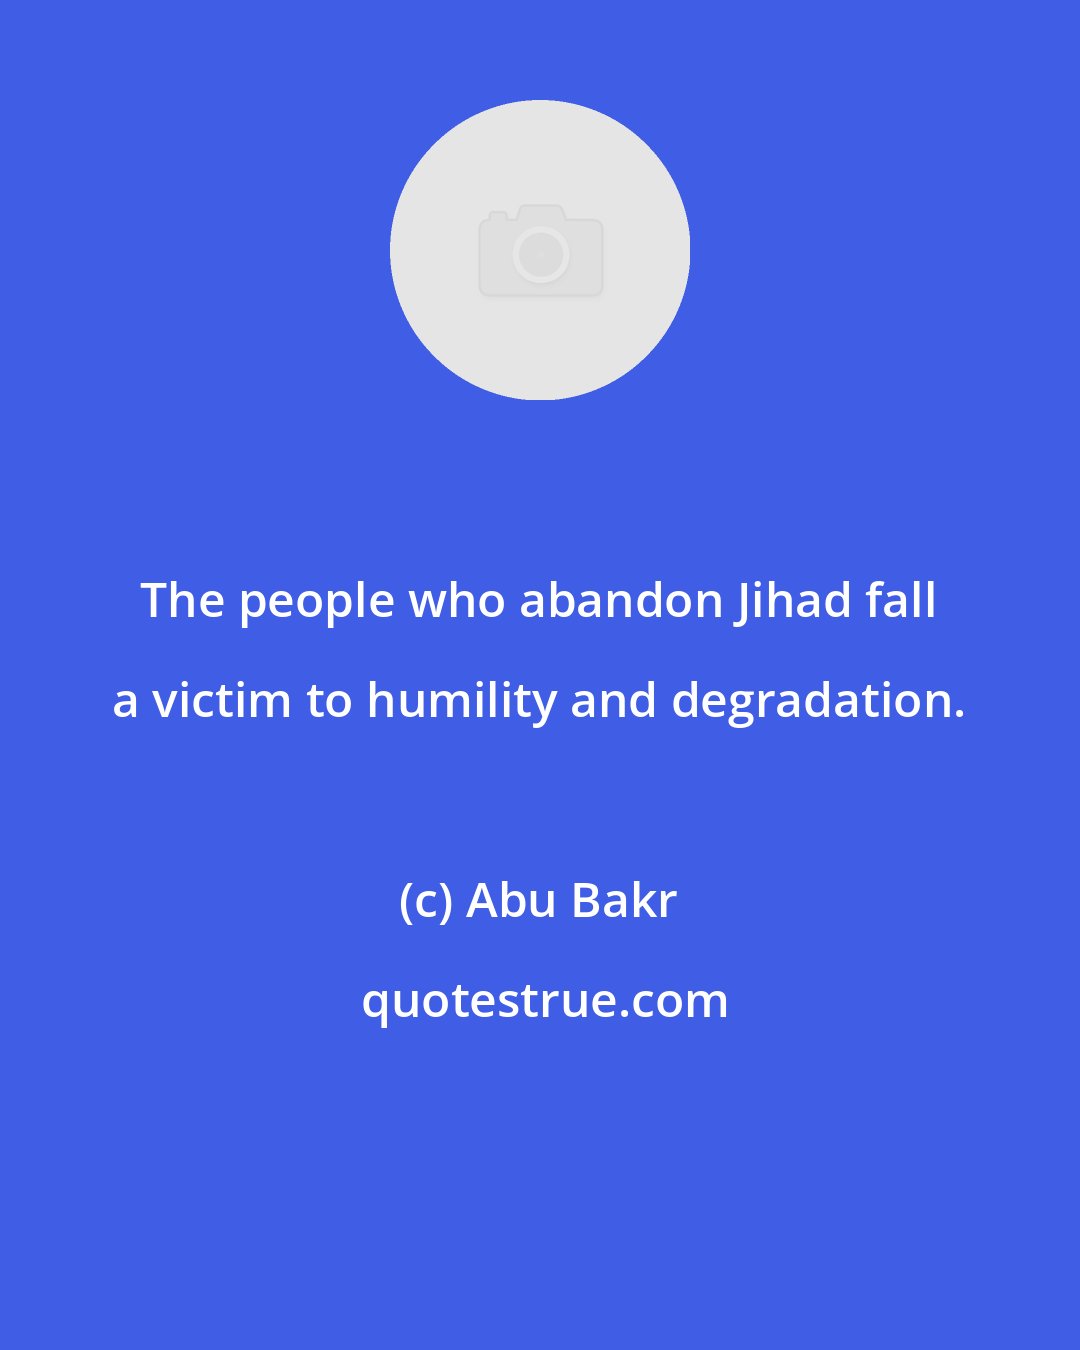 Abu Bakr: The people who abandon Jihad fall a victim to humility and degradation.